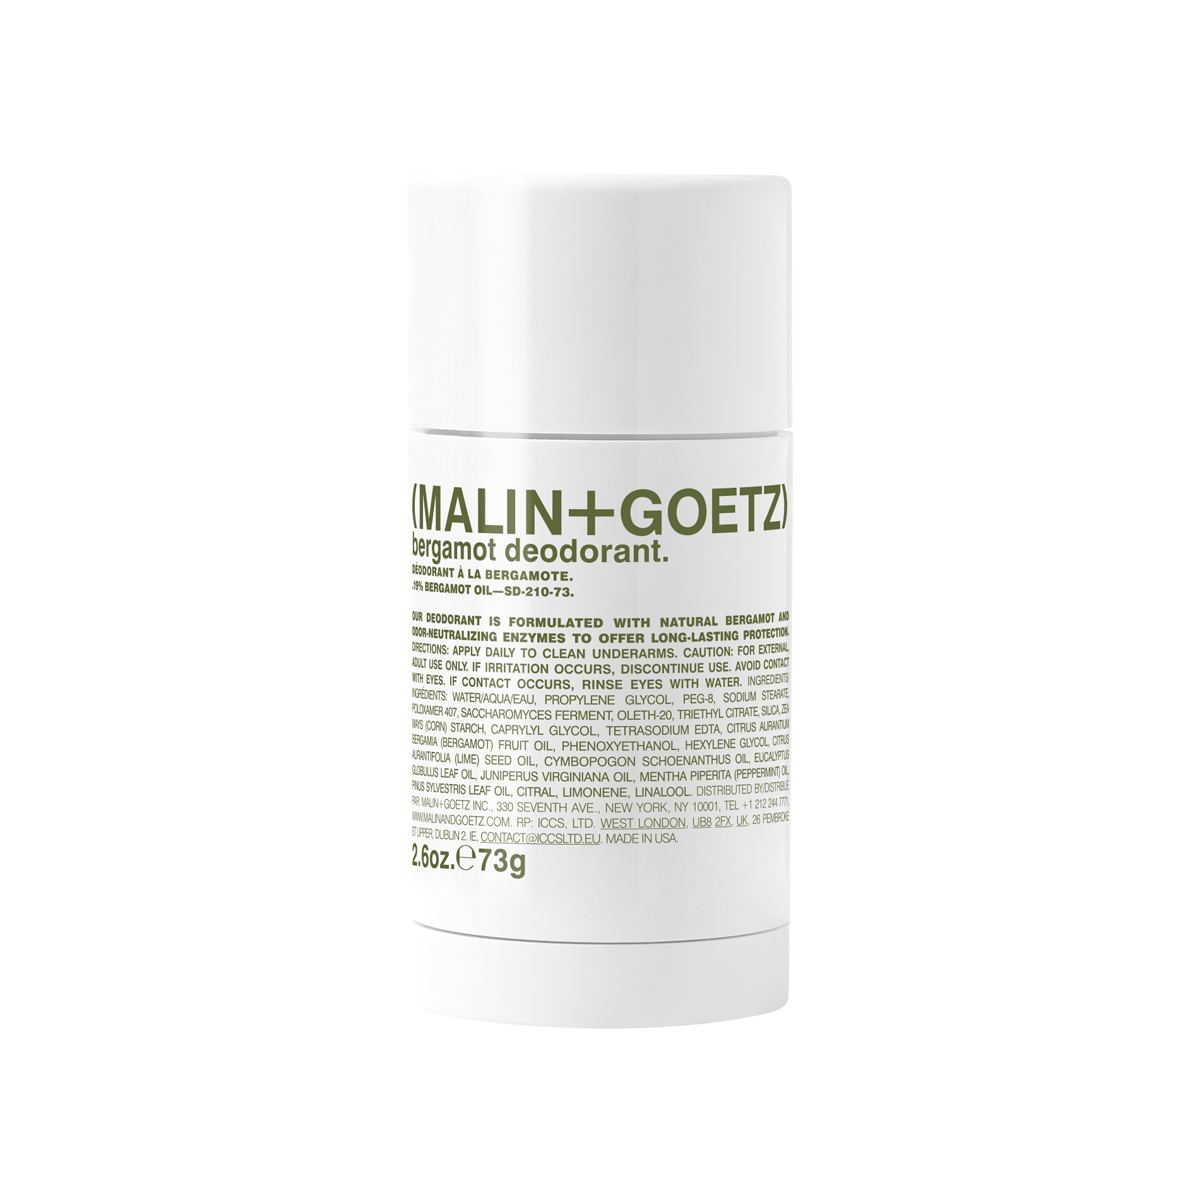 MALIN+GOETZ - Bergamot Deodorant